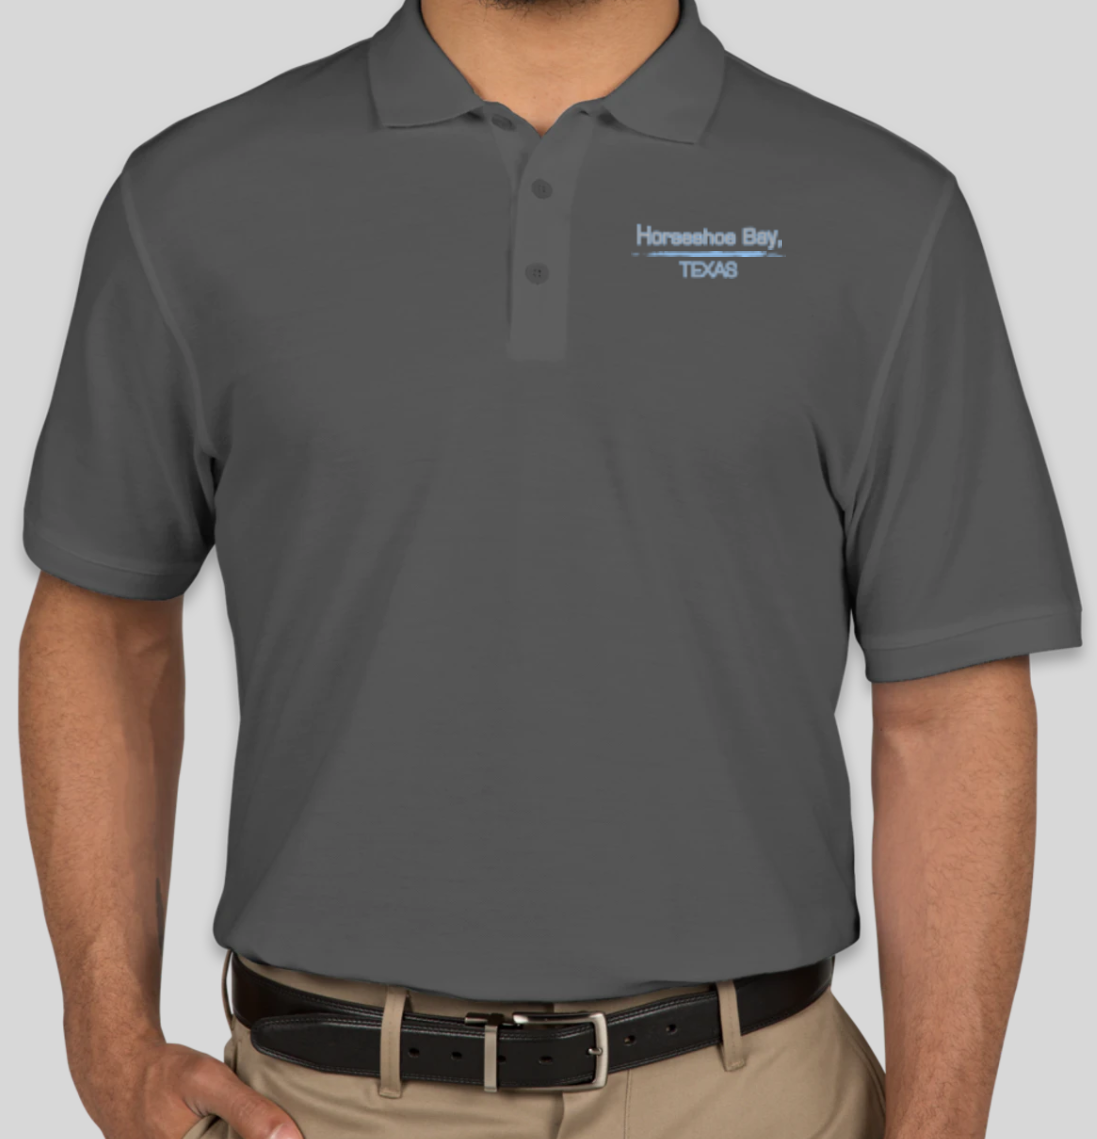 Horseshoe Bay, Texas Men's Golf Shirt